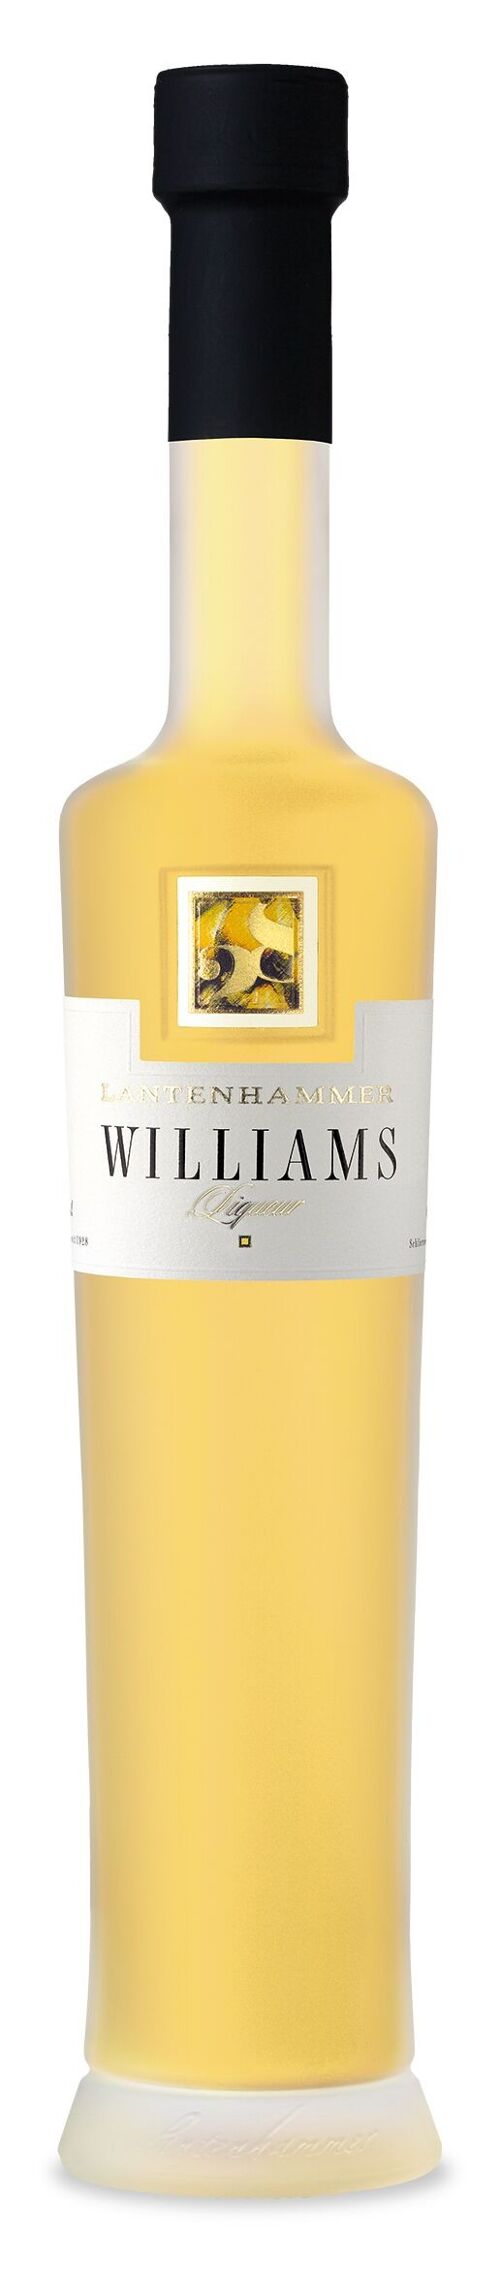 LANTENHAMMER Williams Liqueur 25 % 200 mL